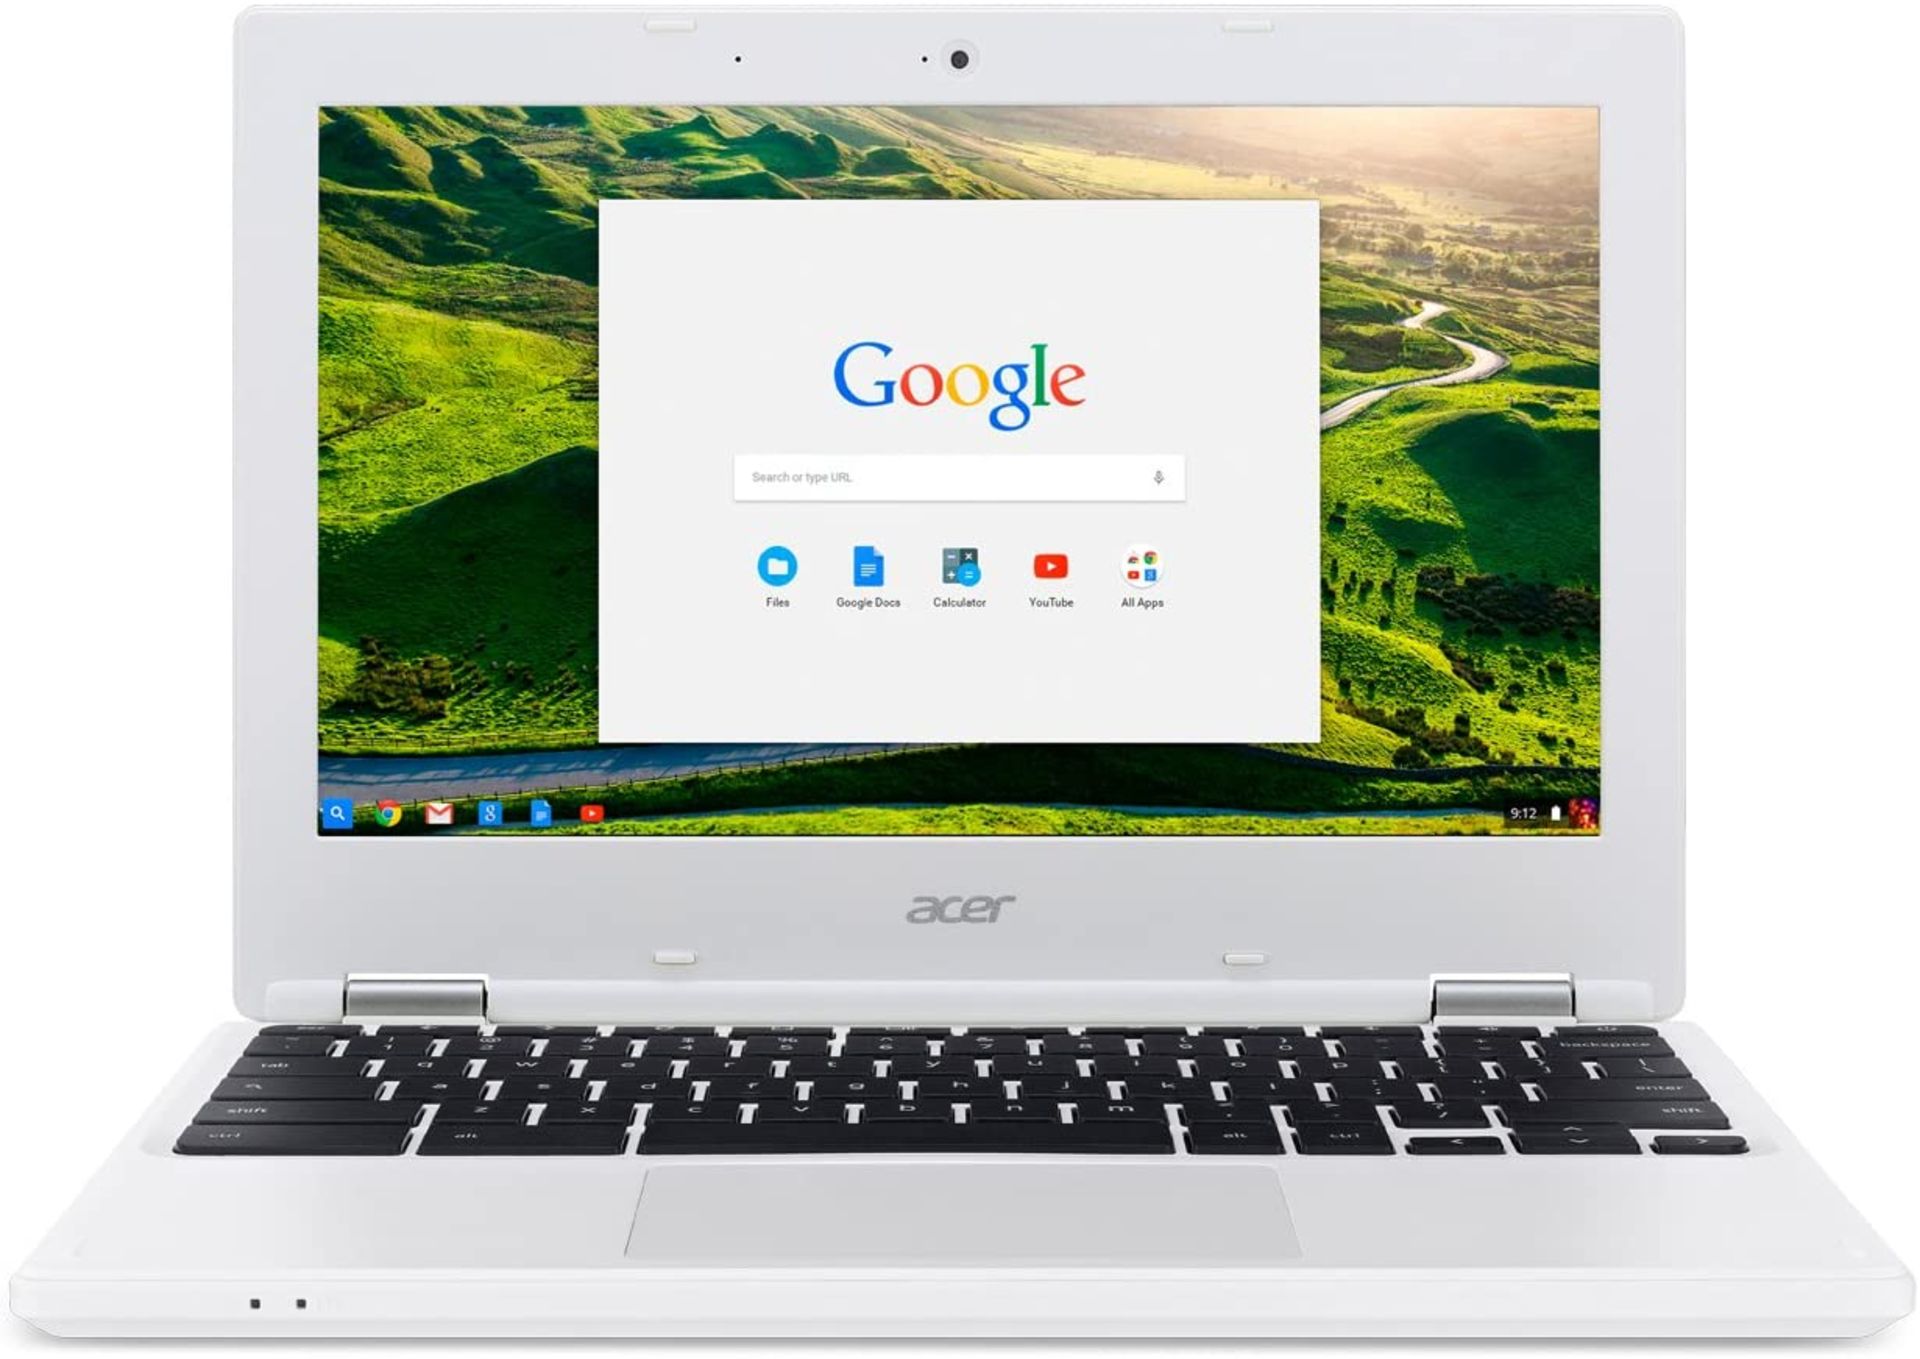 (M5) Acer Chromebook 11.6 inches Laptop CB3-131 Intel Celeron N2840 2 GB 16GB EMMC Chrome White...